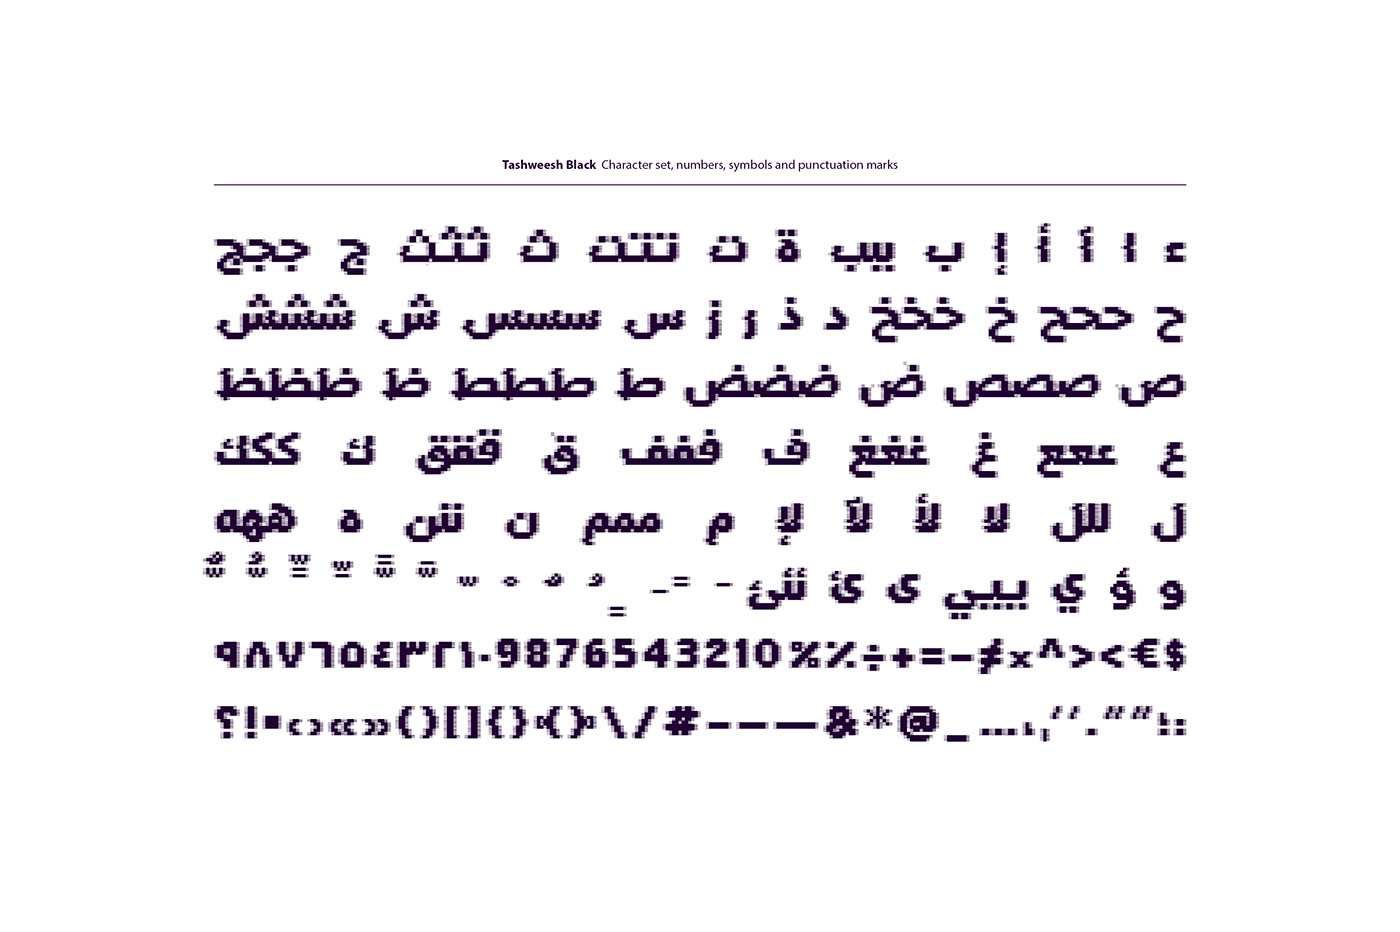 8-bit graphics arabic font color font islamic art OpenType SVG pixellated svg font تايبوجرافي تايبوغرافي خط عربي